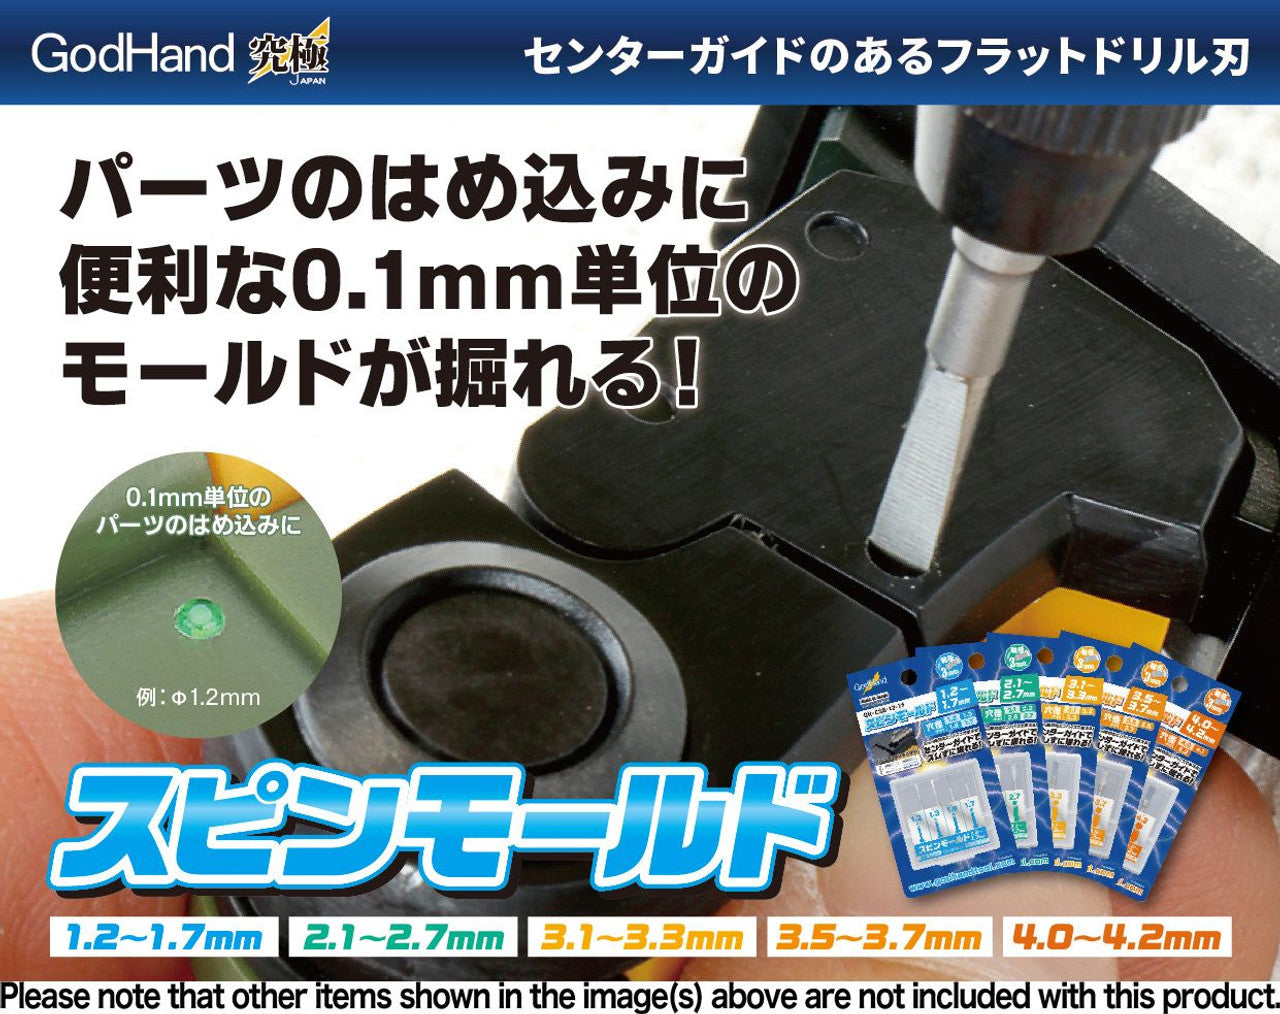 God Hand GH-CSB-21-27 Spin Mold 2.1 - 2.7mm - BanzaiHobby